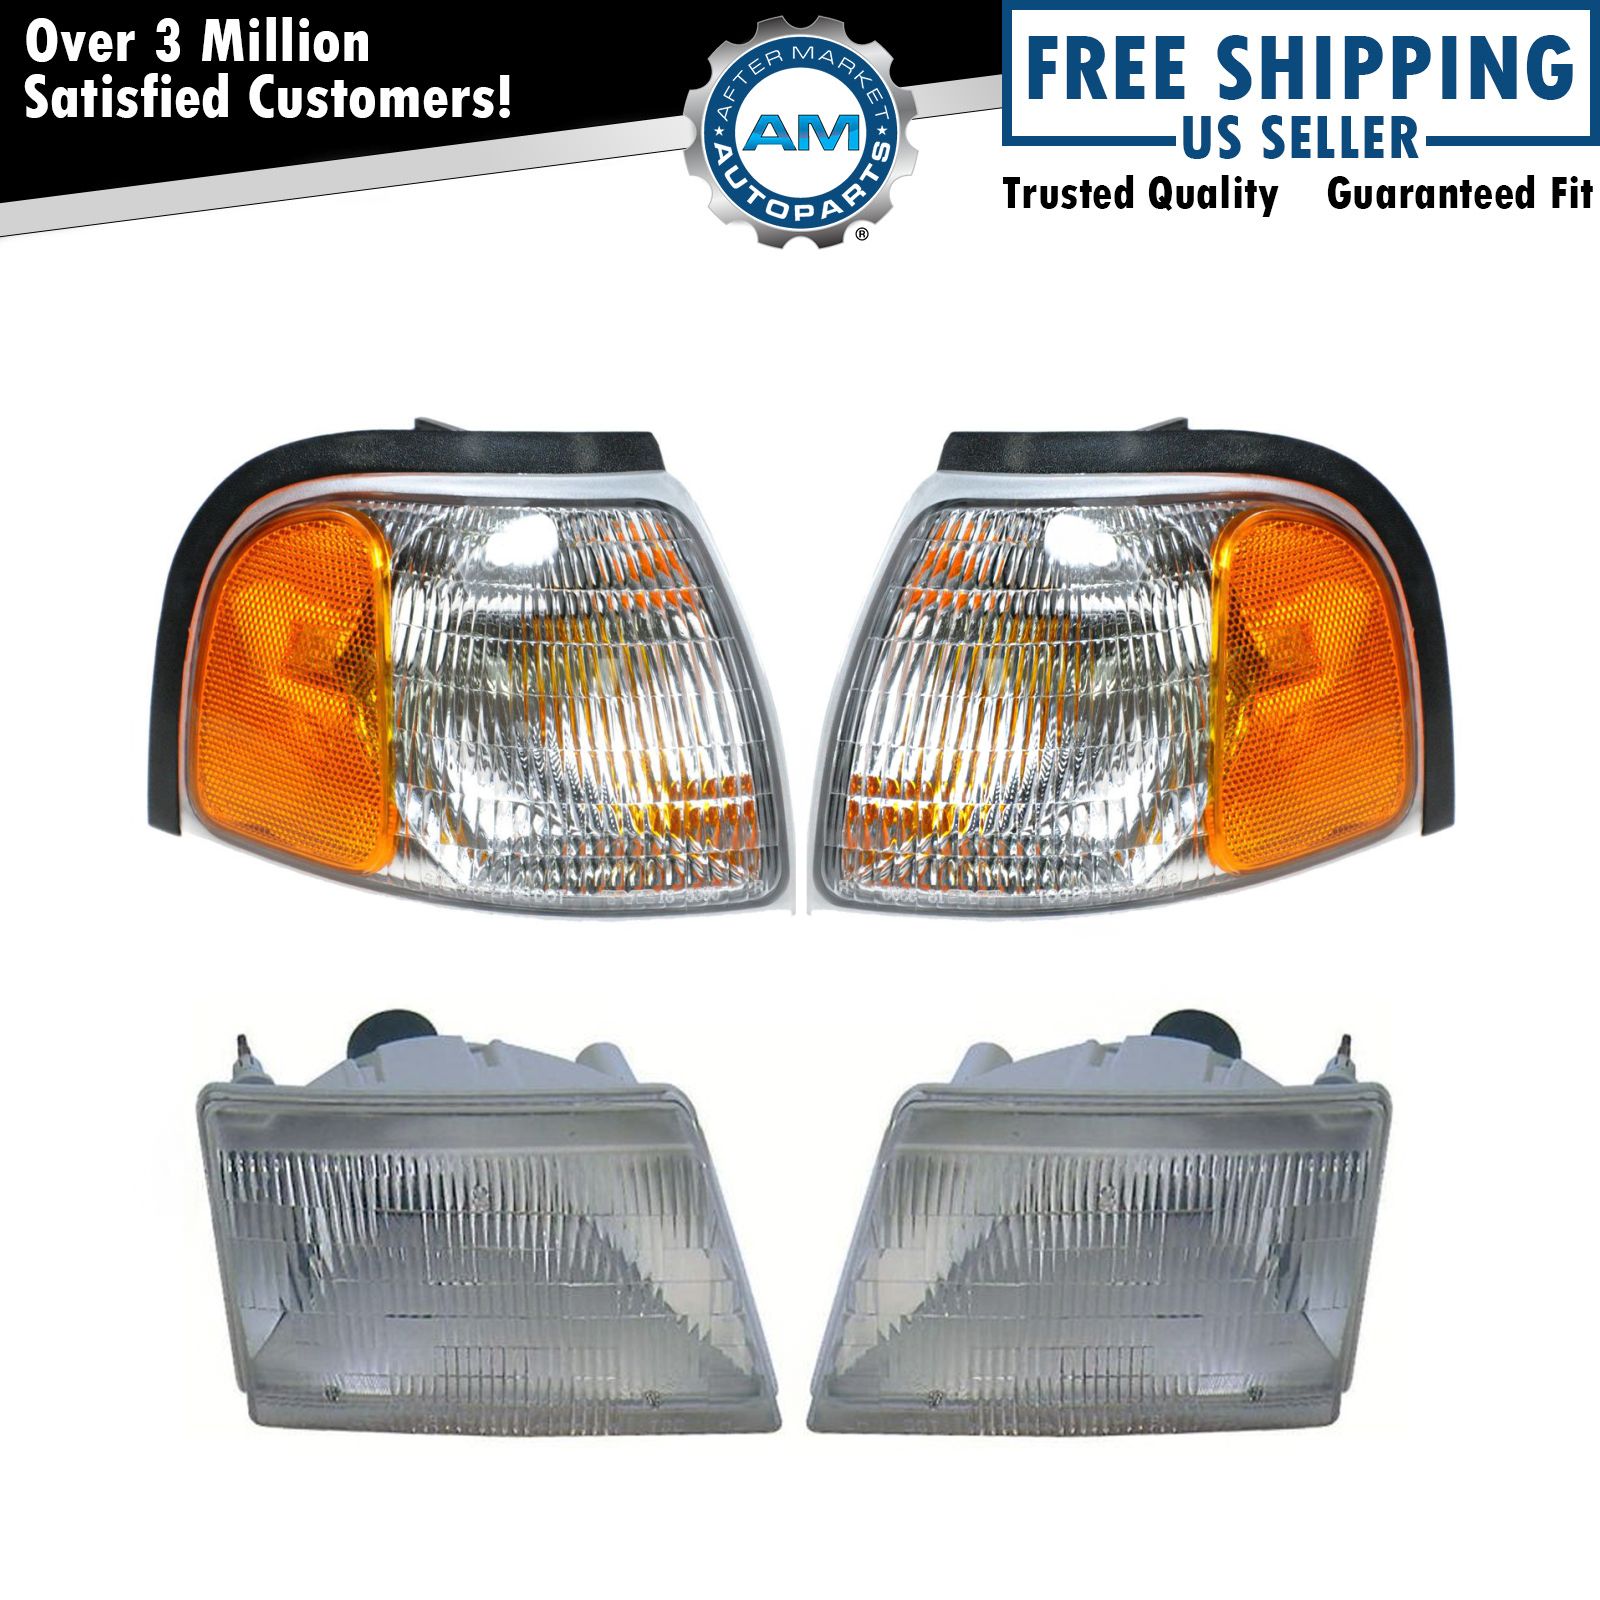 Headlight Parking Light Lamp LH RH 4 Piece Kit Silver for Mazda Pickup Truck New